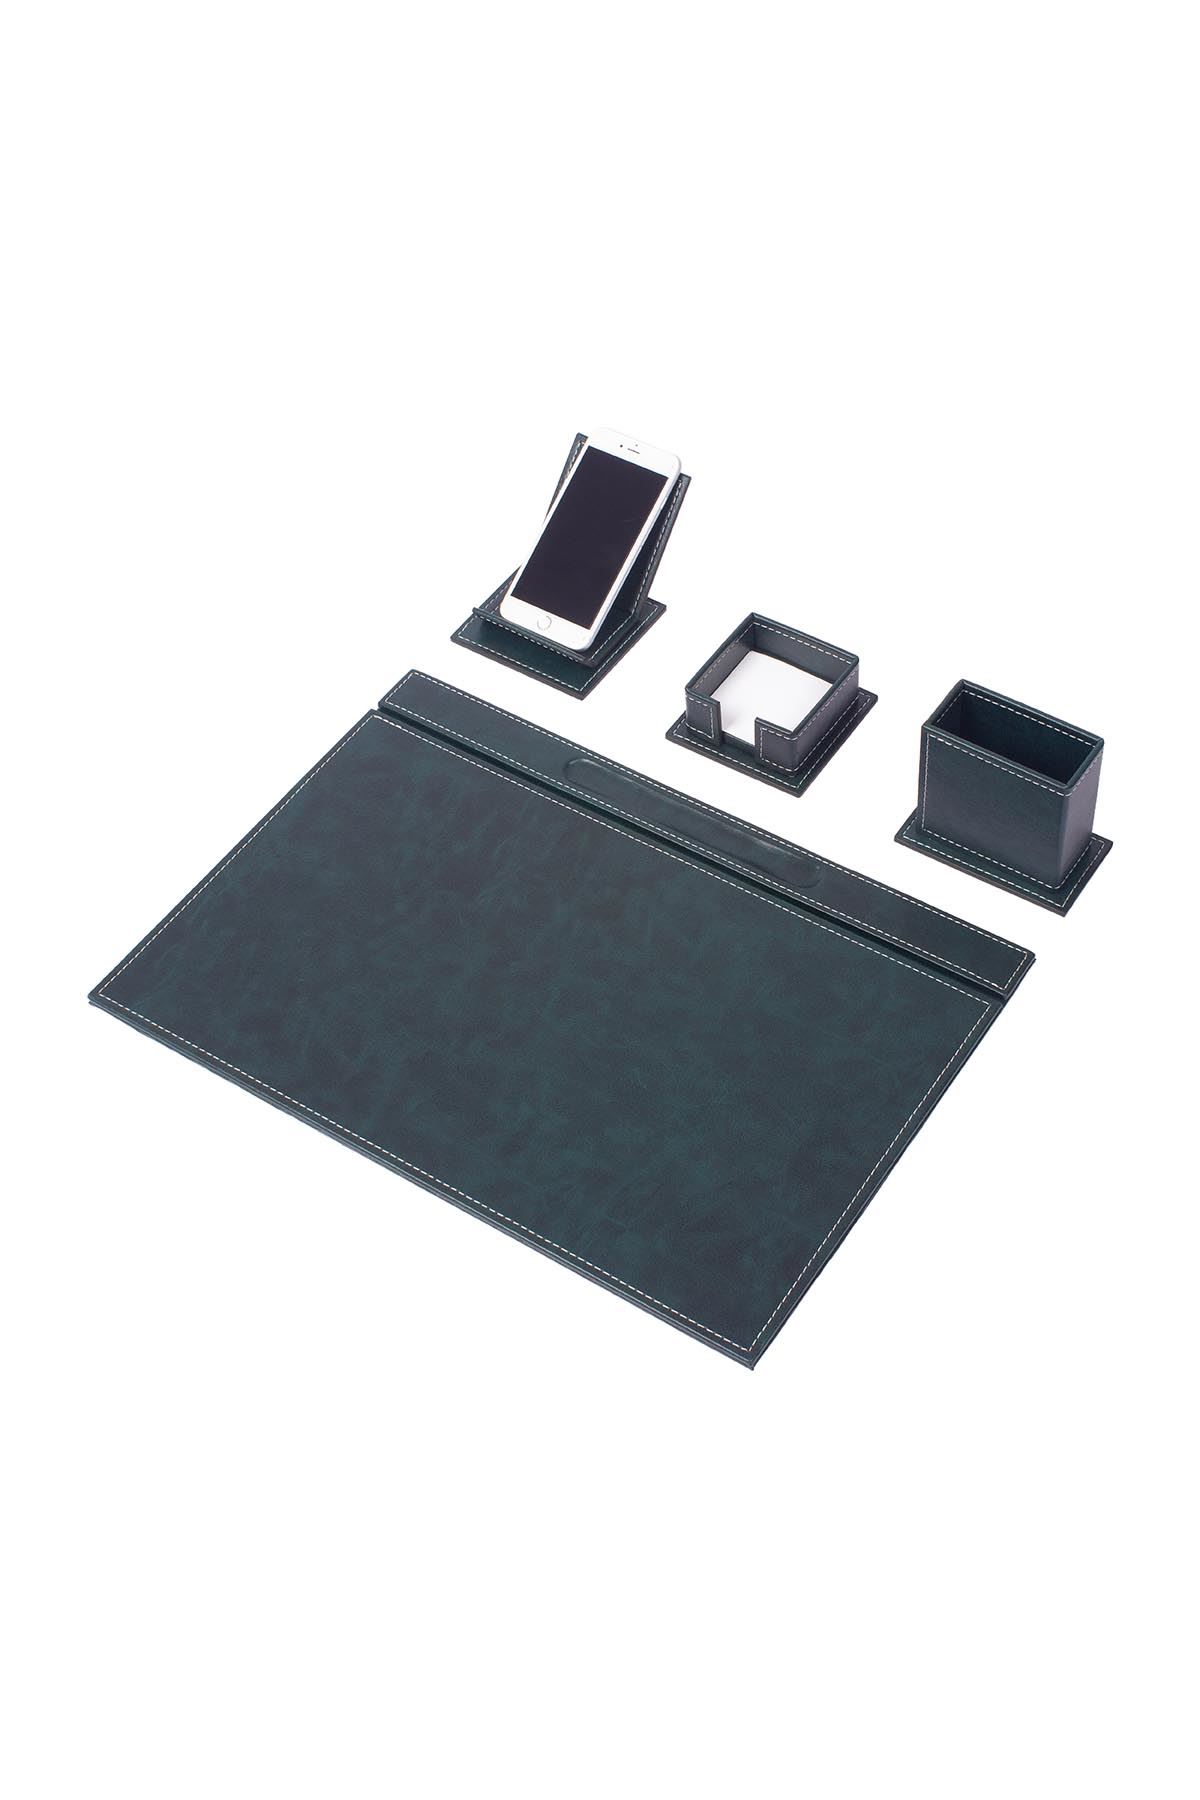 Vega Leather Desk Set Green 4 Accessories